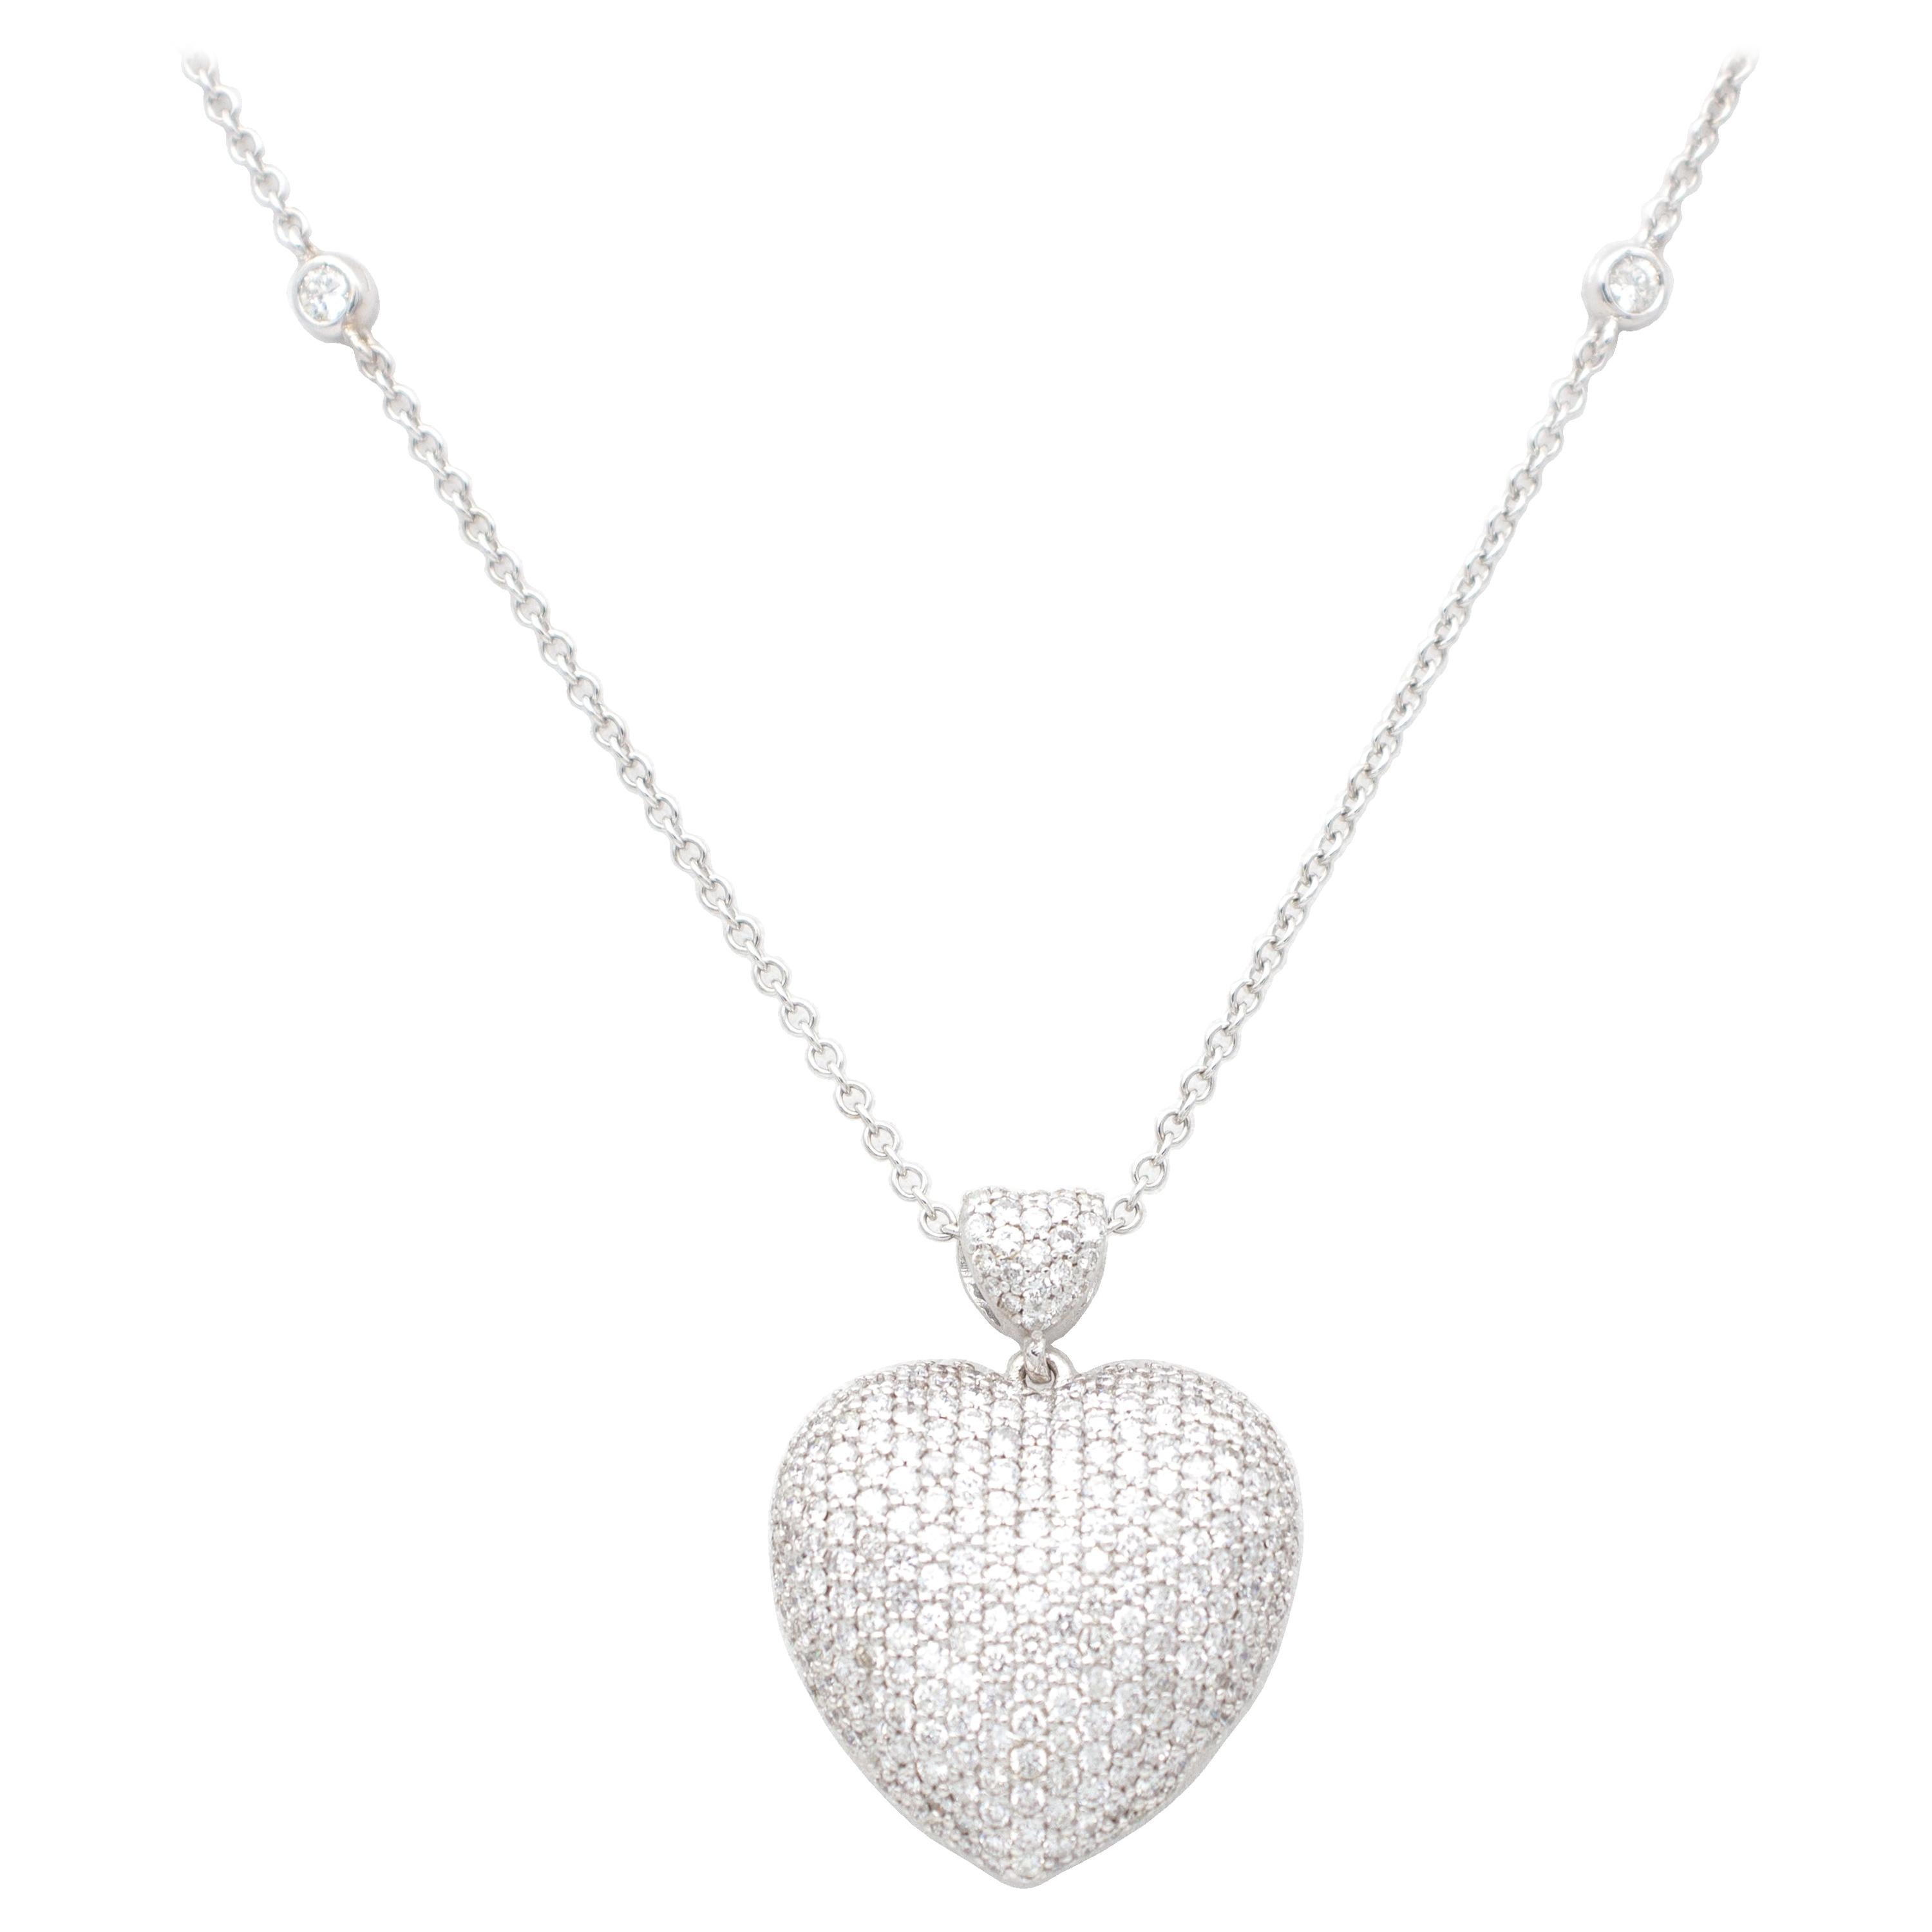 3.51 Ct White Diamonds, 18kt White Gold Heart Shape Pendant Necklace